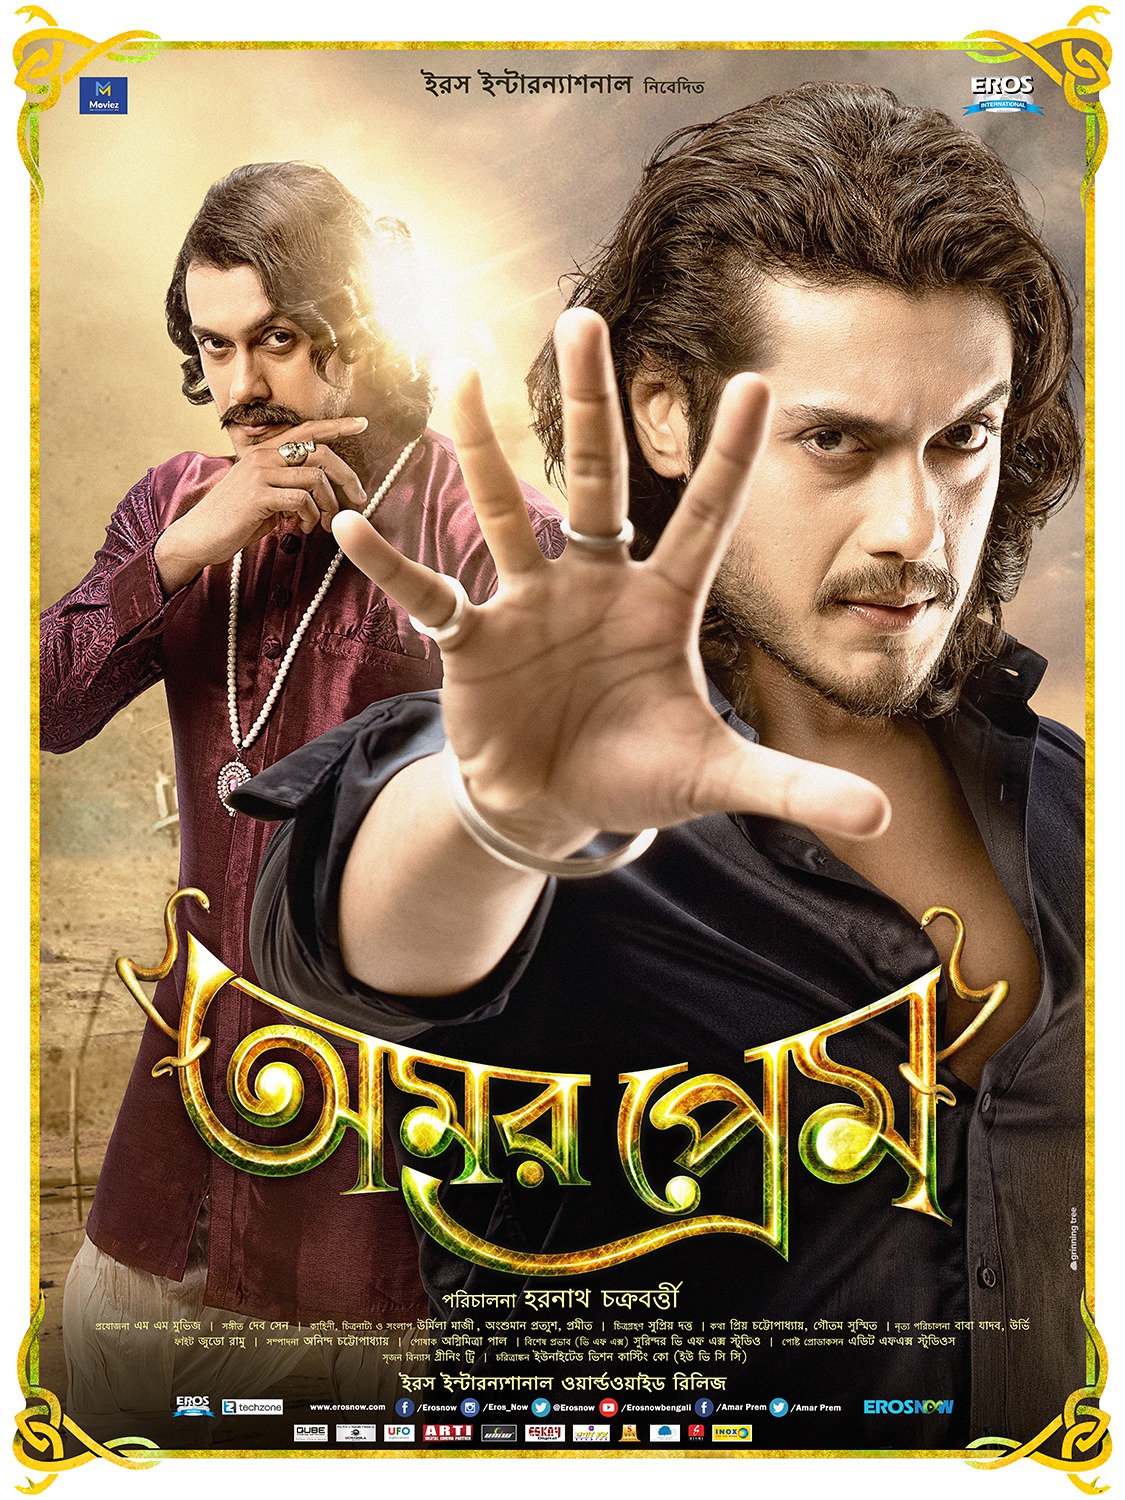 Extra Large Movie Poster Image for Amar Prem (#6 of 9)